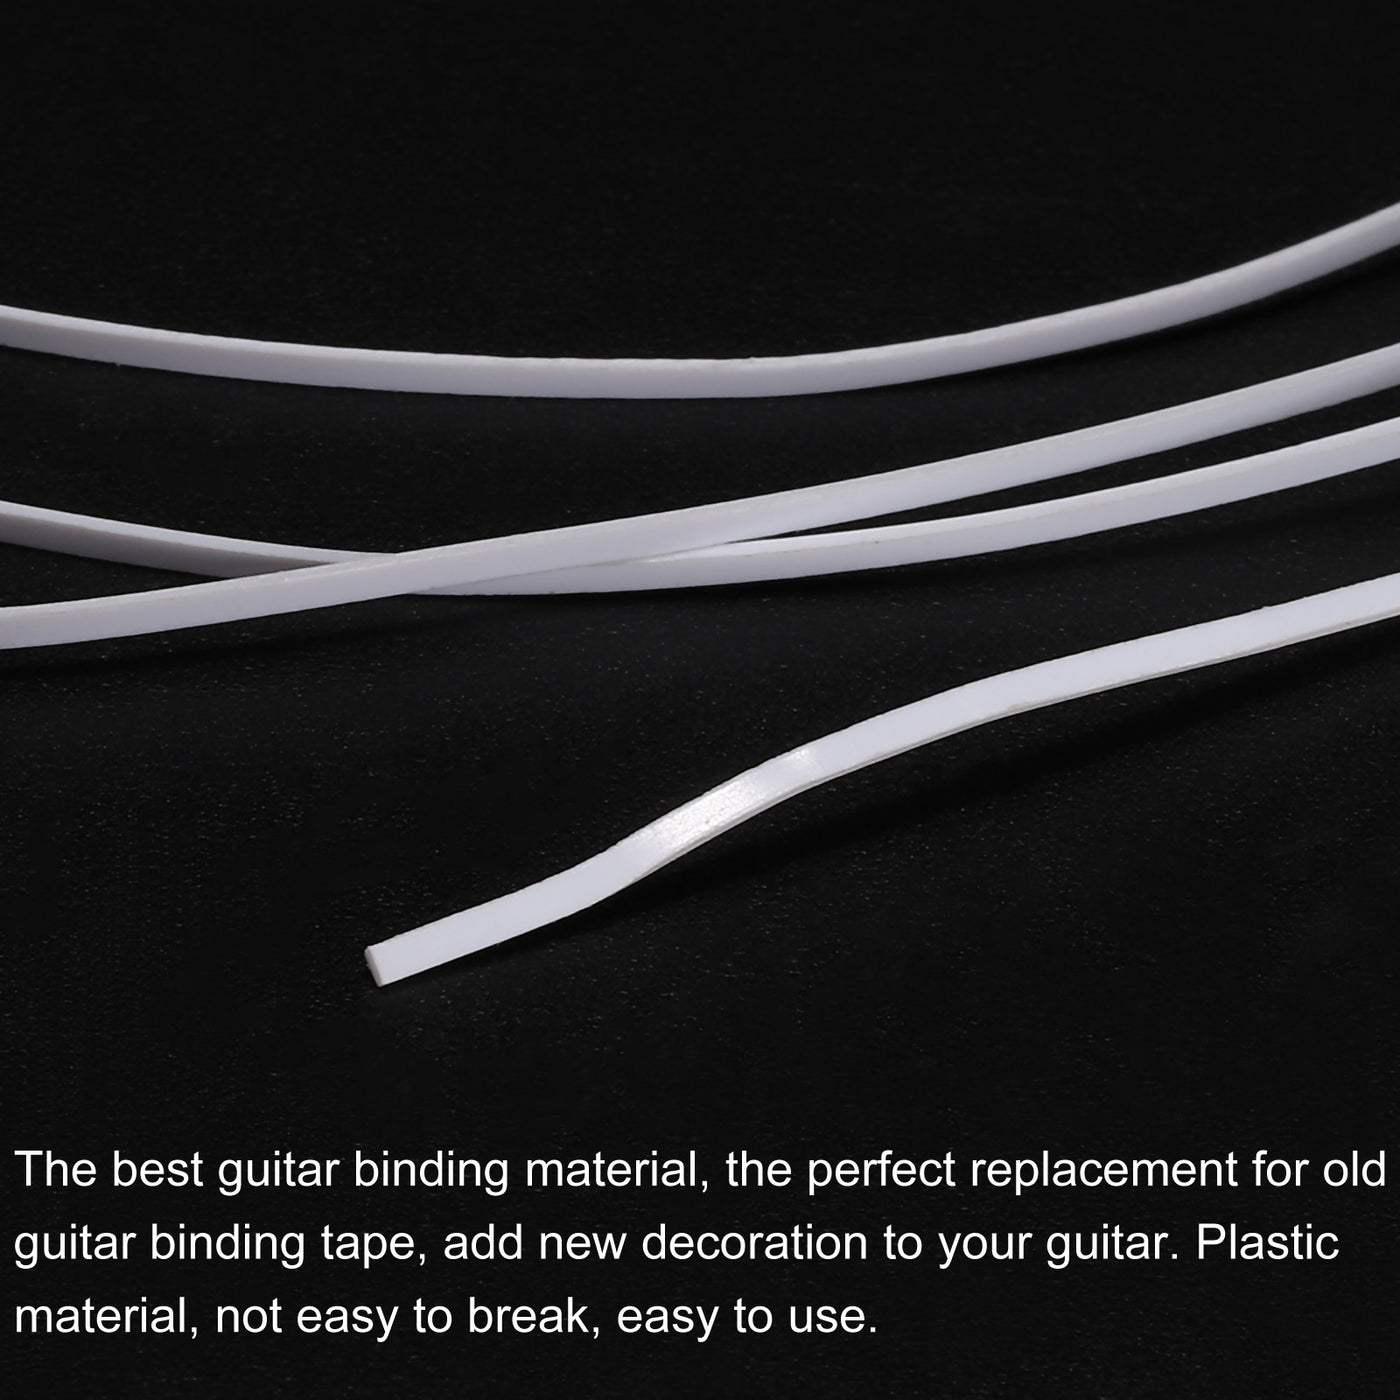 Harfington Plastic Binding Purfling Strip 1650x1x0.5mm for Guitar White 2 Pack